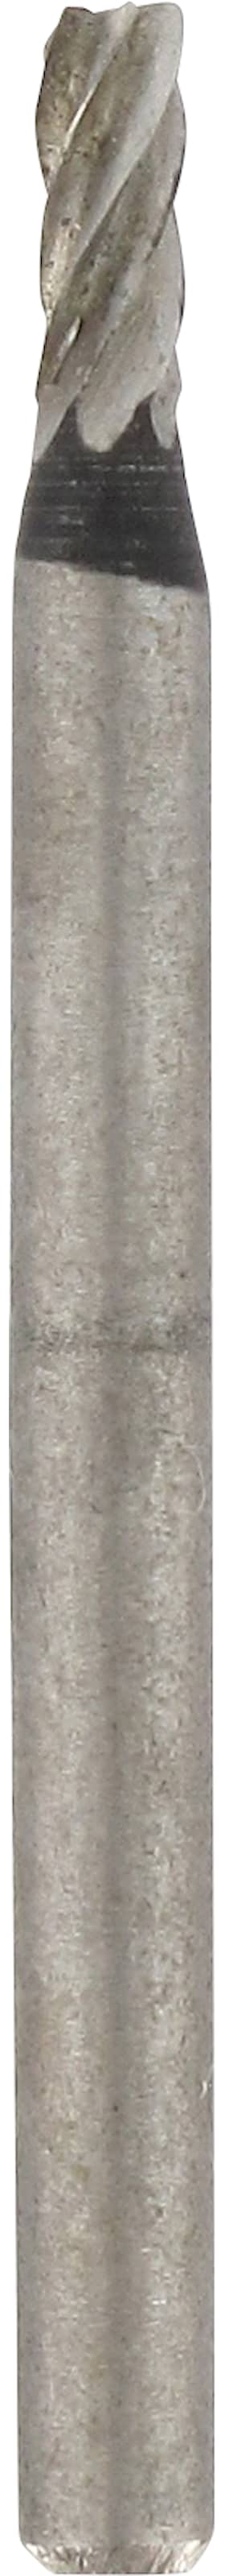 Dremel graverestift 113JA 1,6 mm. 3 stk. pak Graverstift